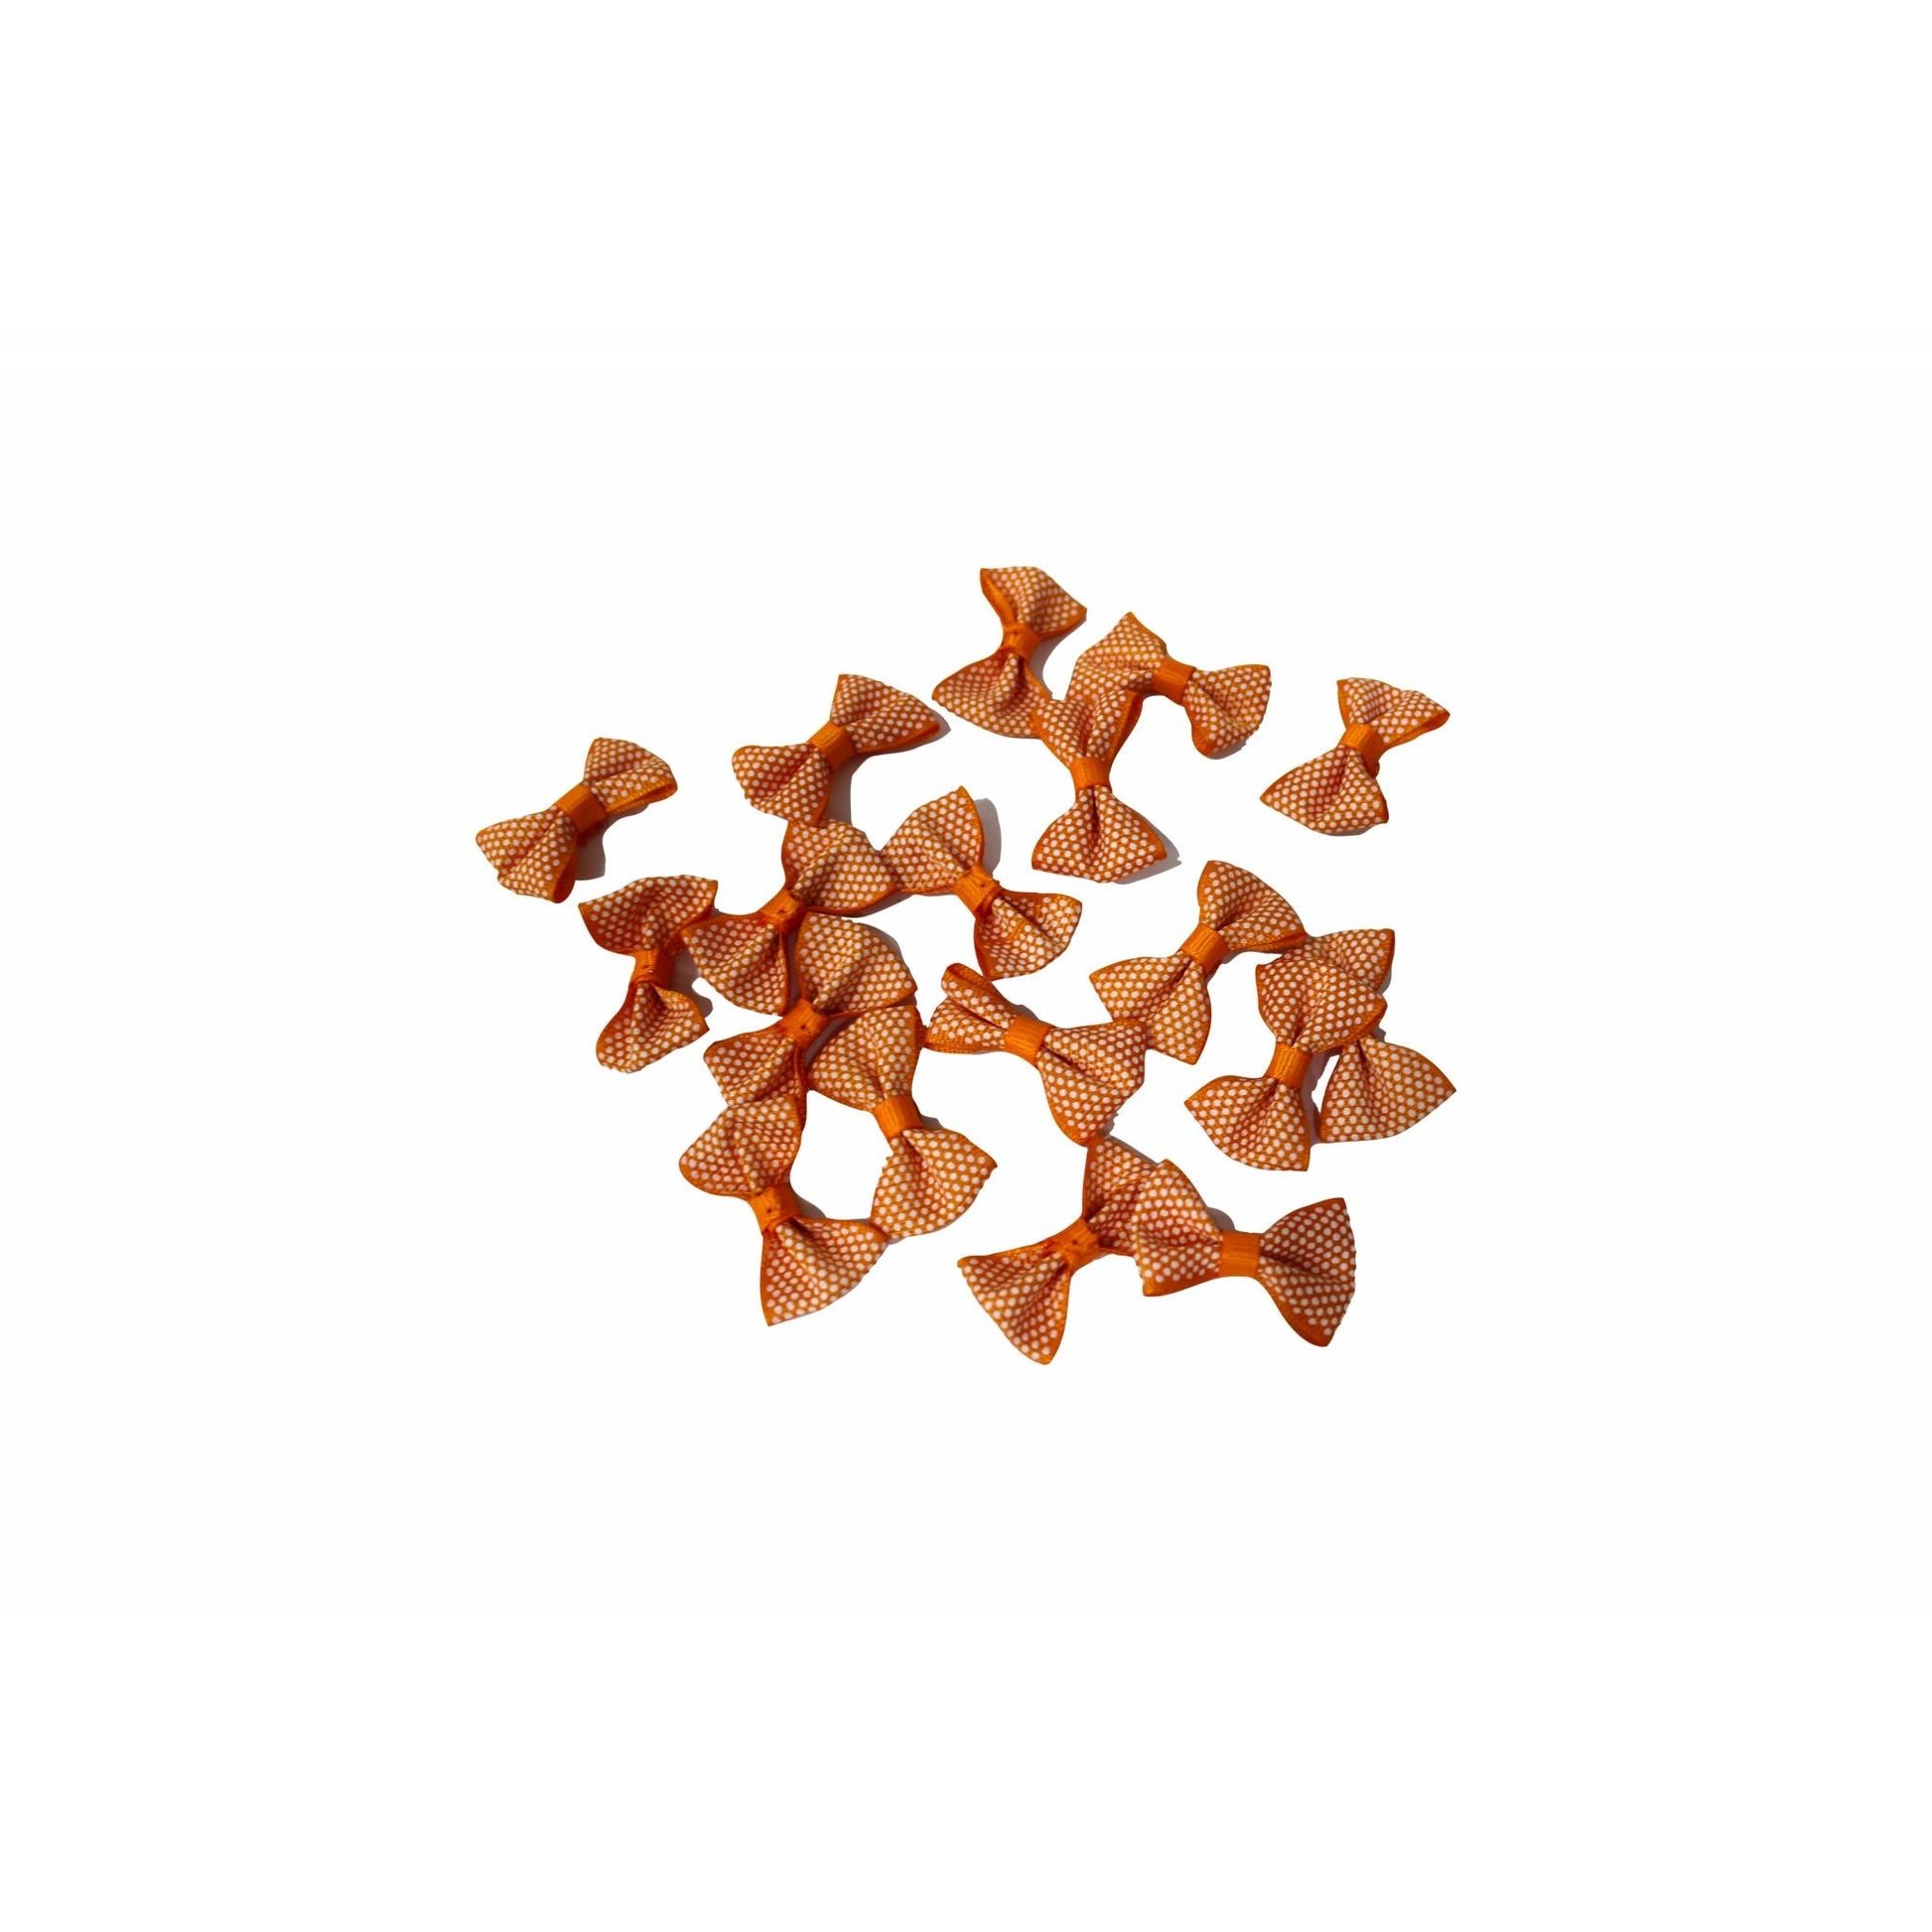 Indian Petals Cute Small Polka-dot Ribbon Bow Cabochons Motif for Craft or Decoration - 12468, Orange